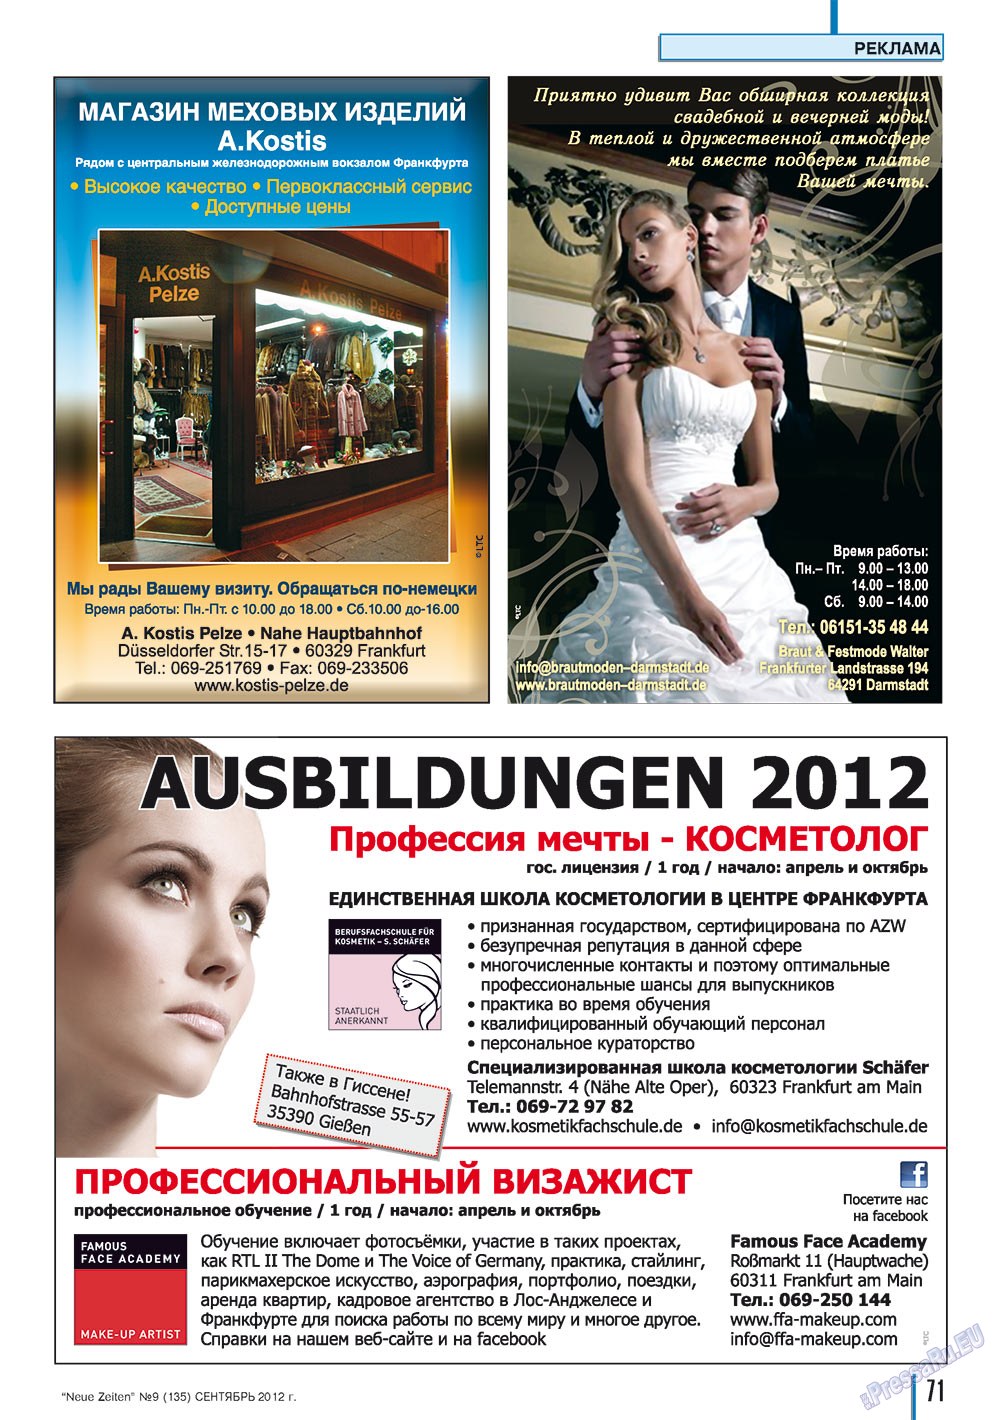 Neue Zeiten (журнал). 2012 год, номер 9, стр. 71